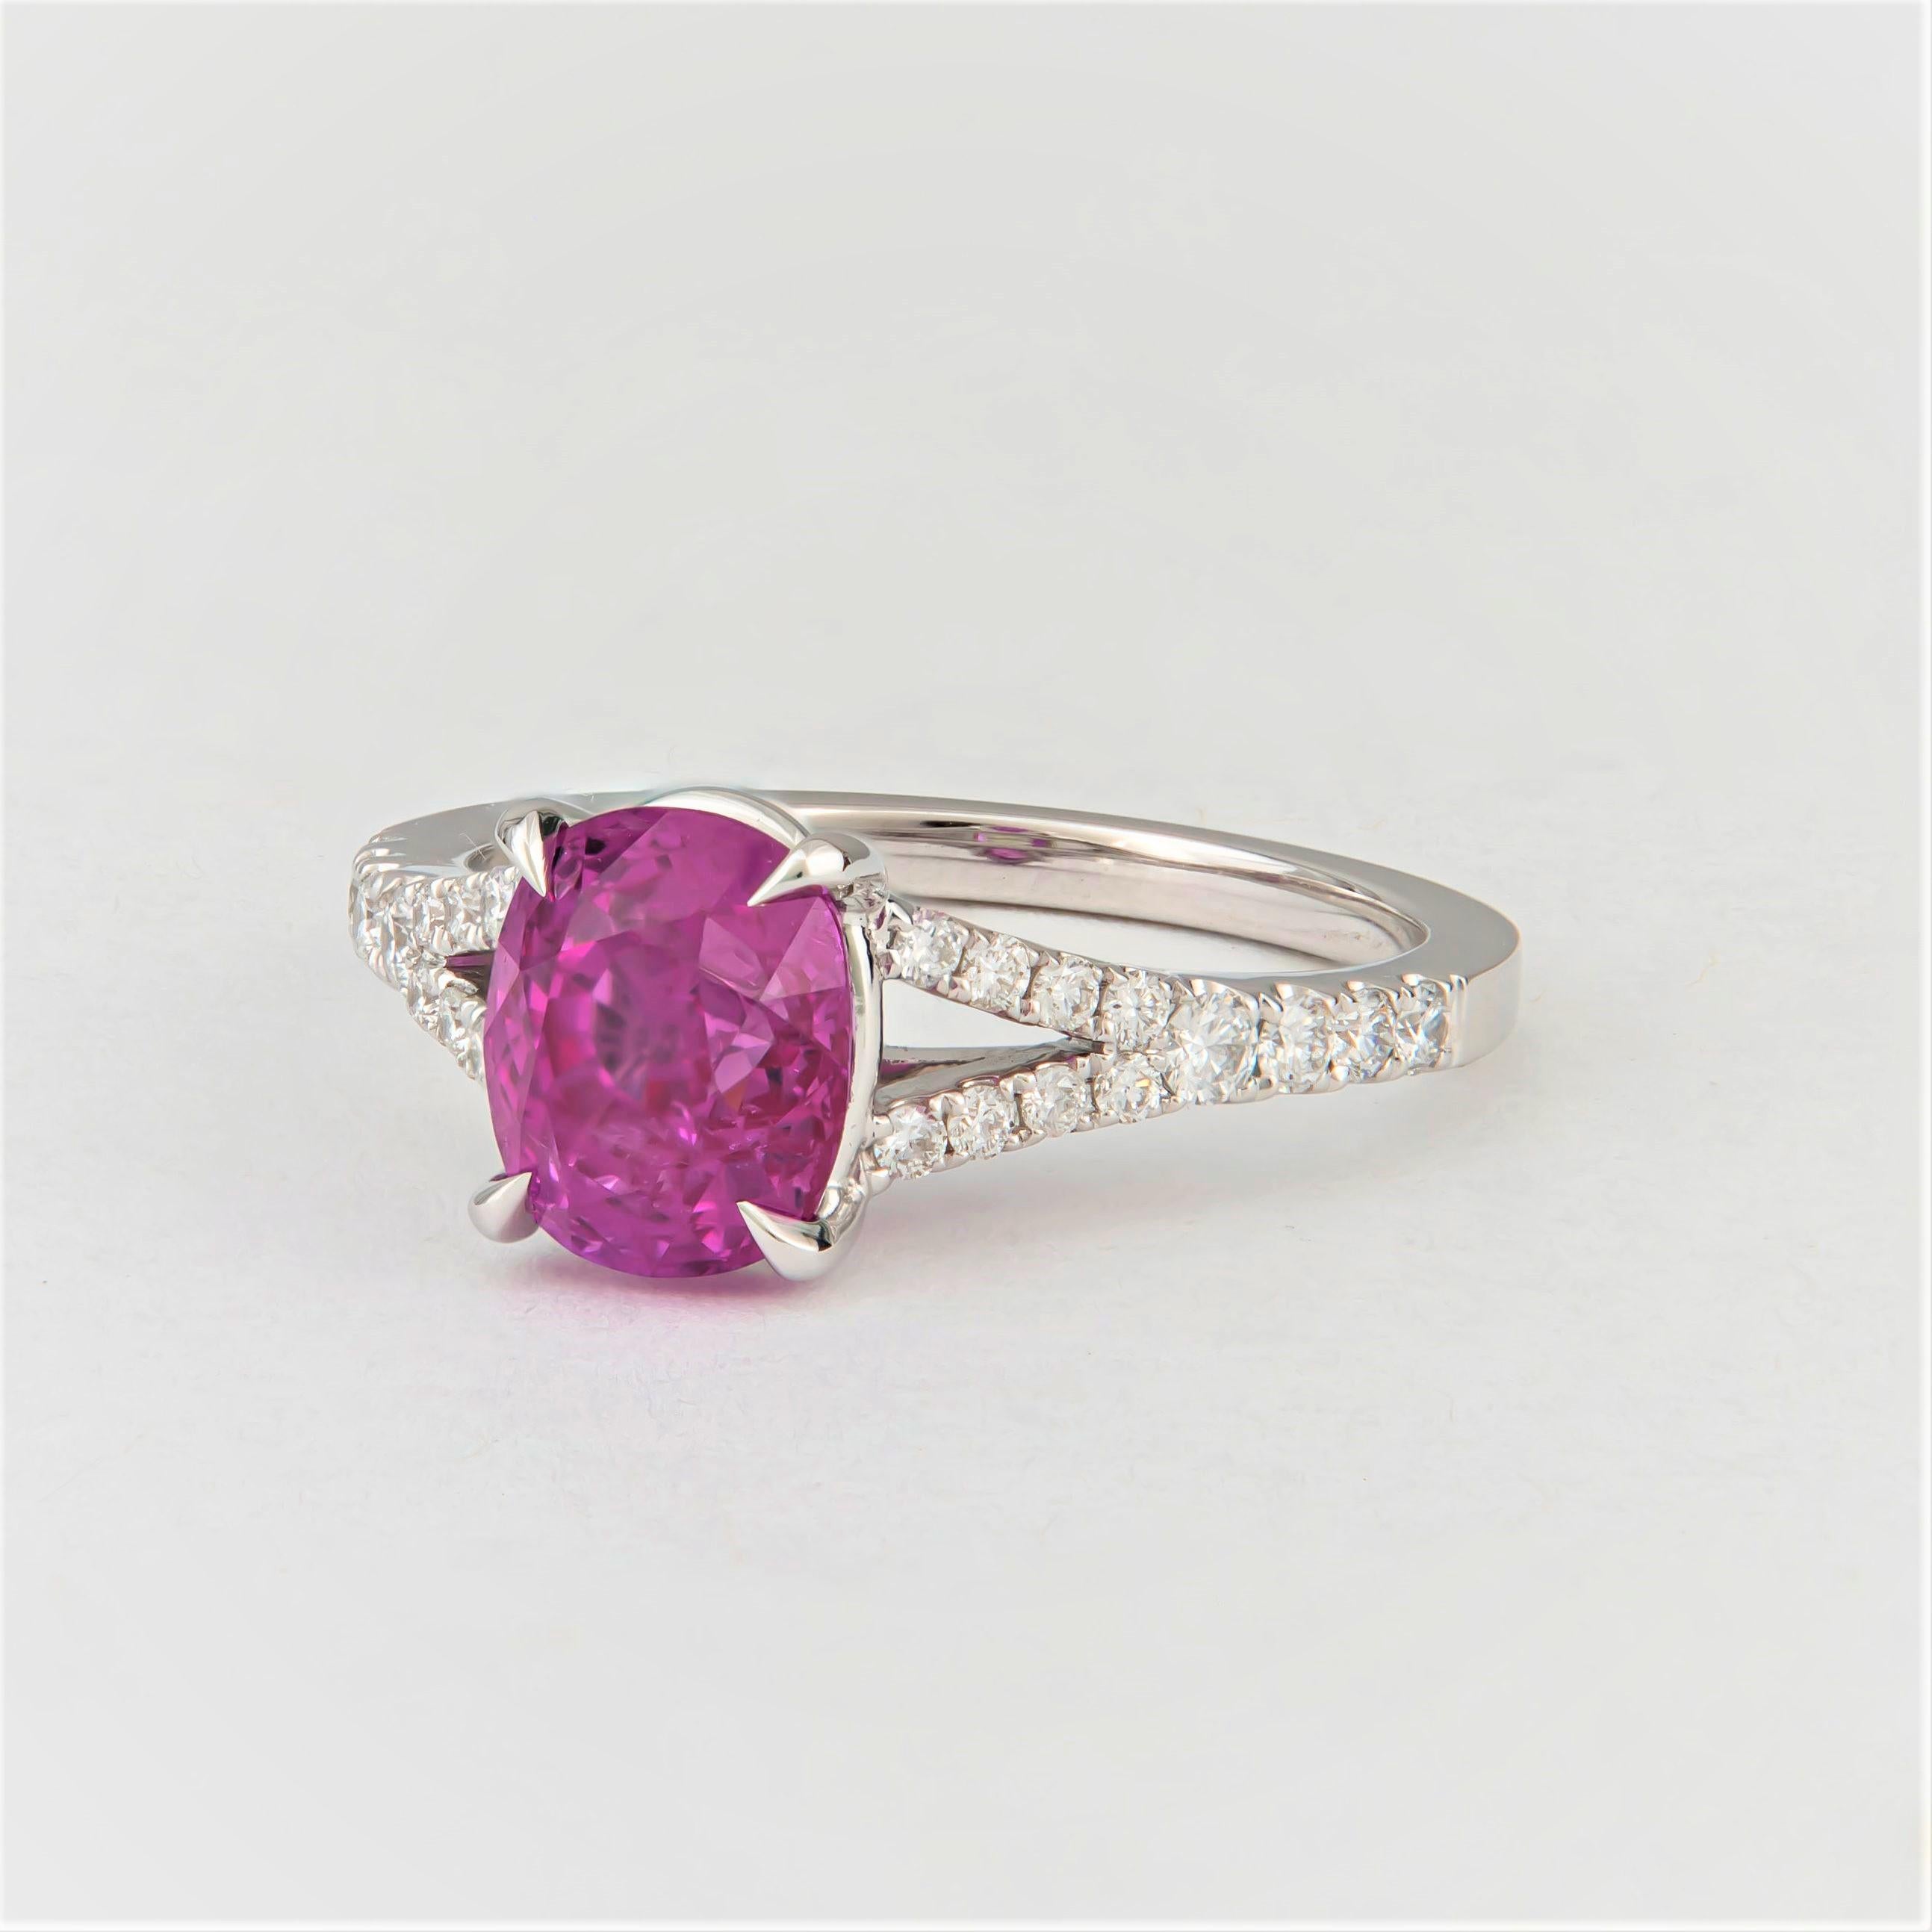 2.77 Carat Cushion Cut Natural Pink Burma Sapphire 'GIA' and Diamond Ring, 18K 2